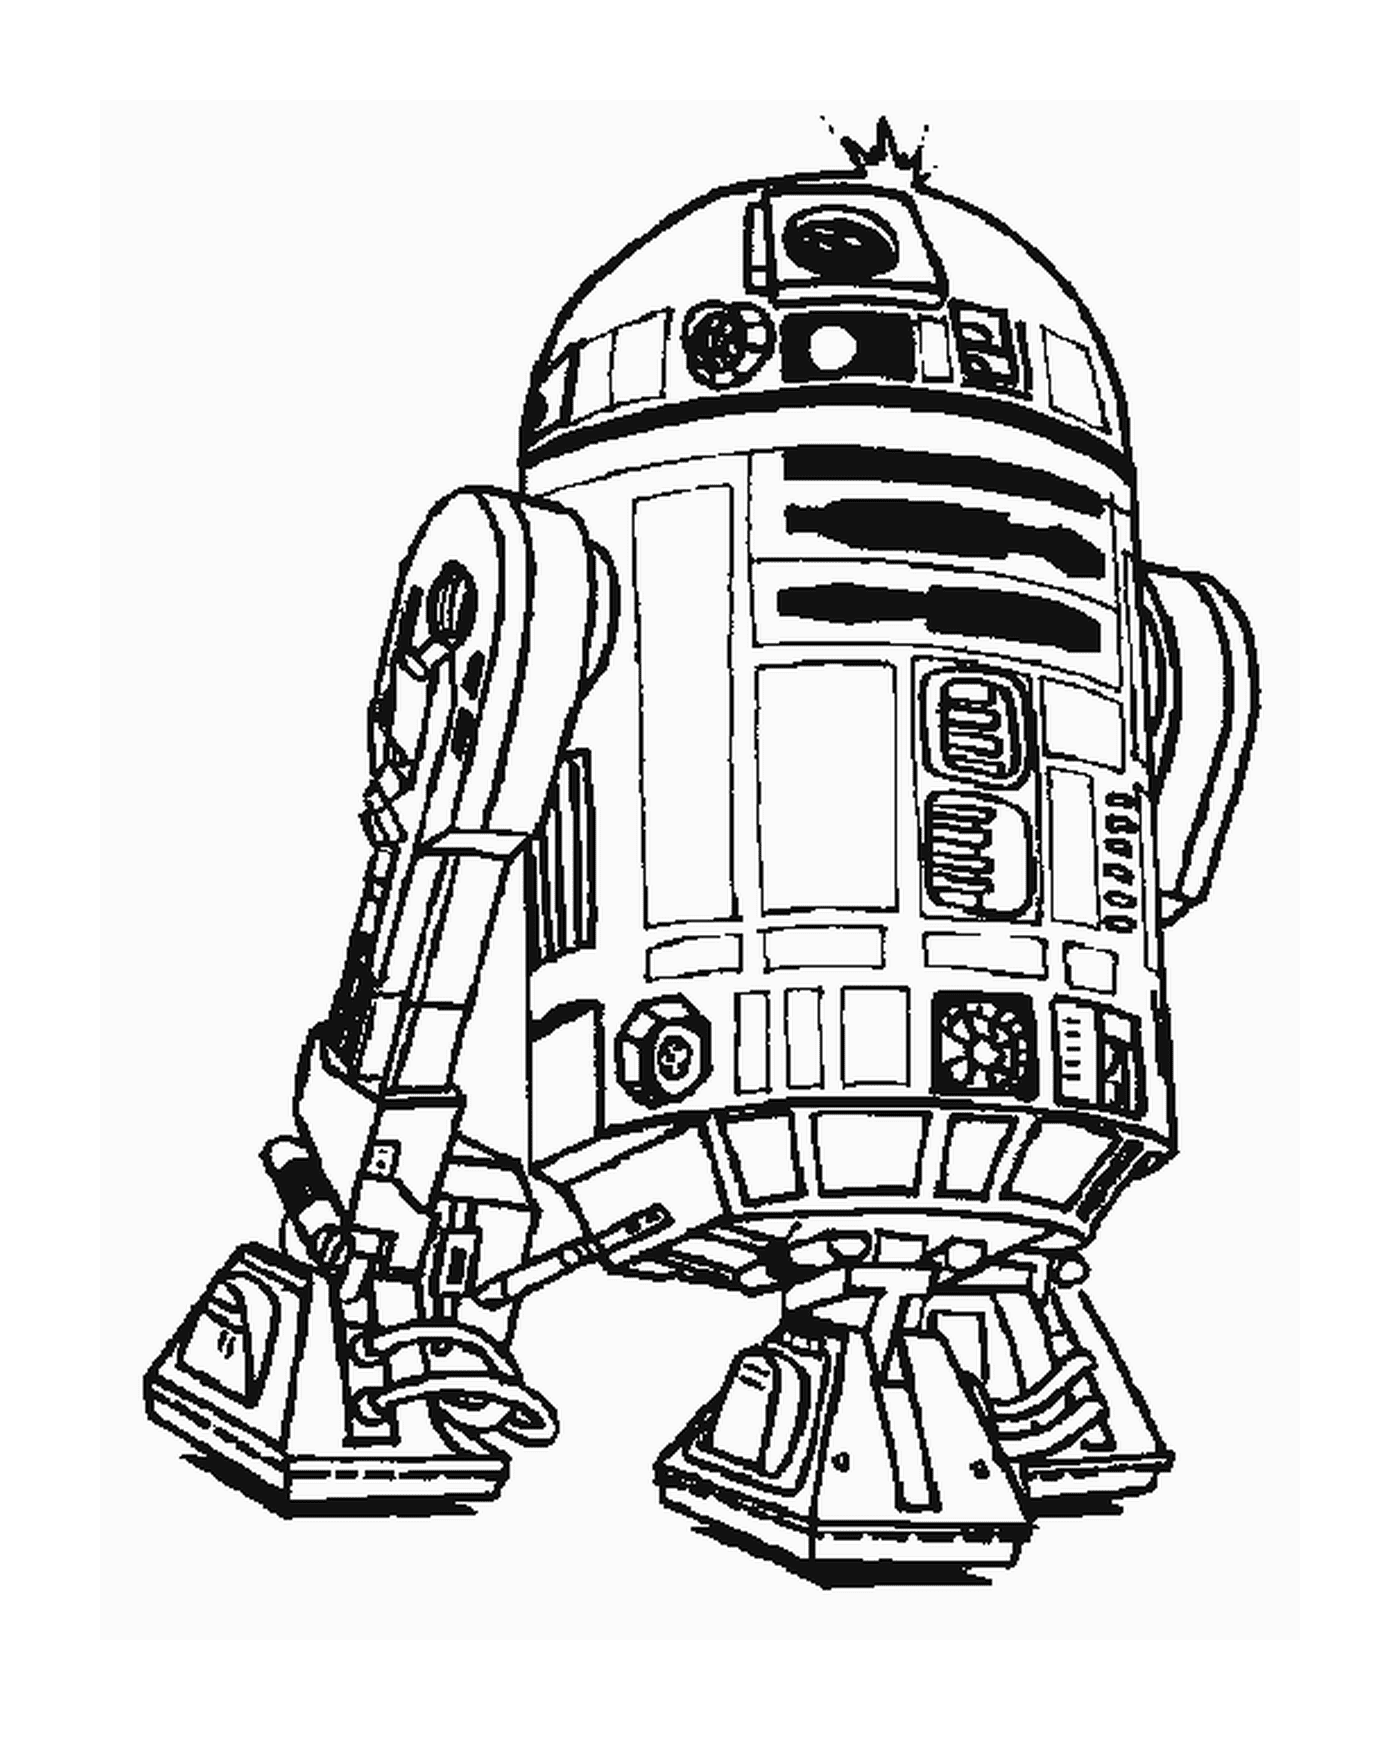  Drawing of an R2-D2 robot 